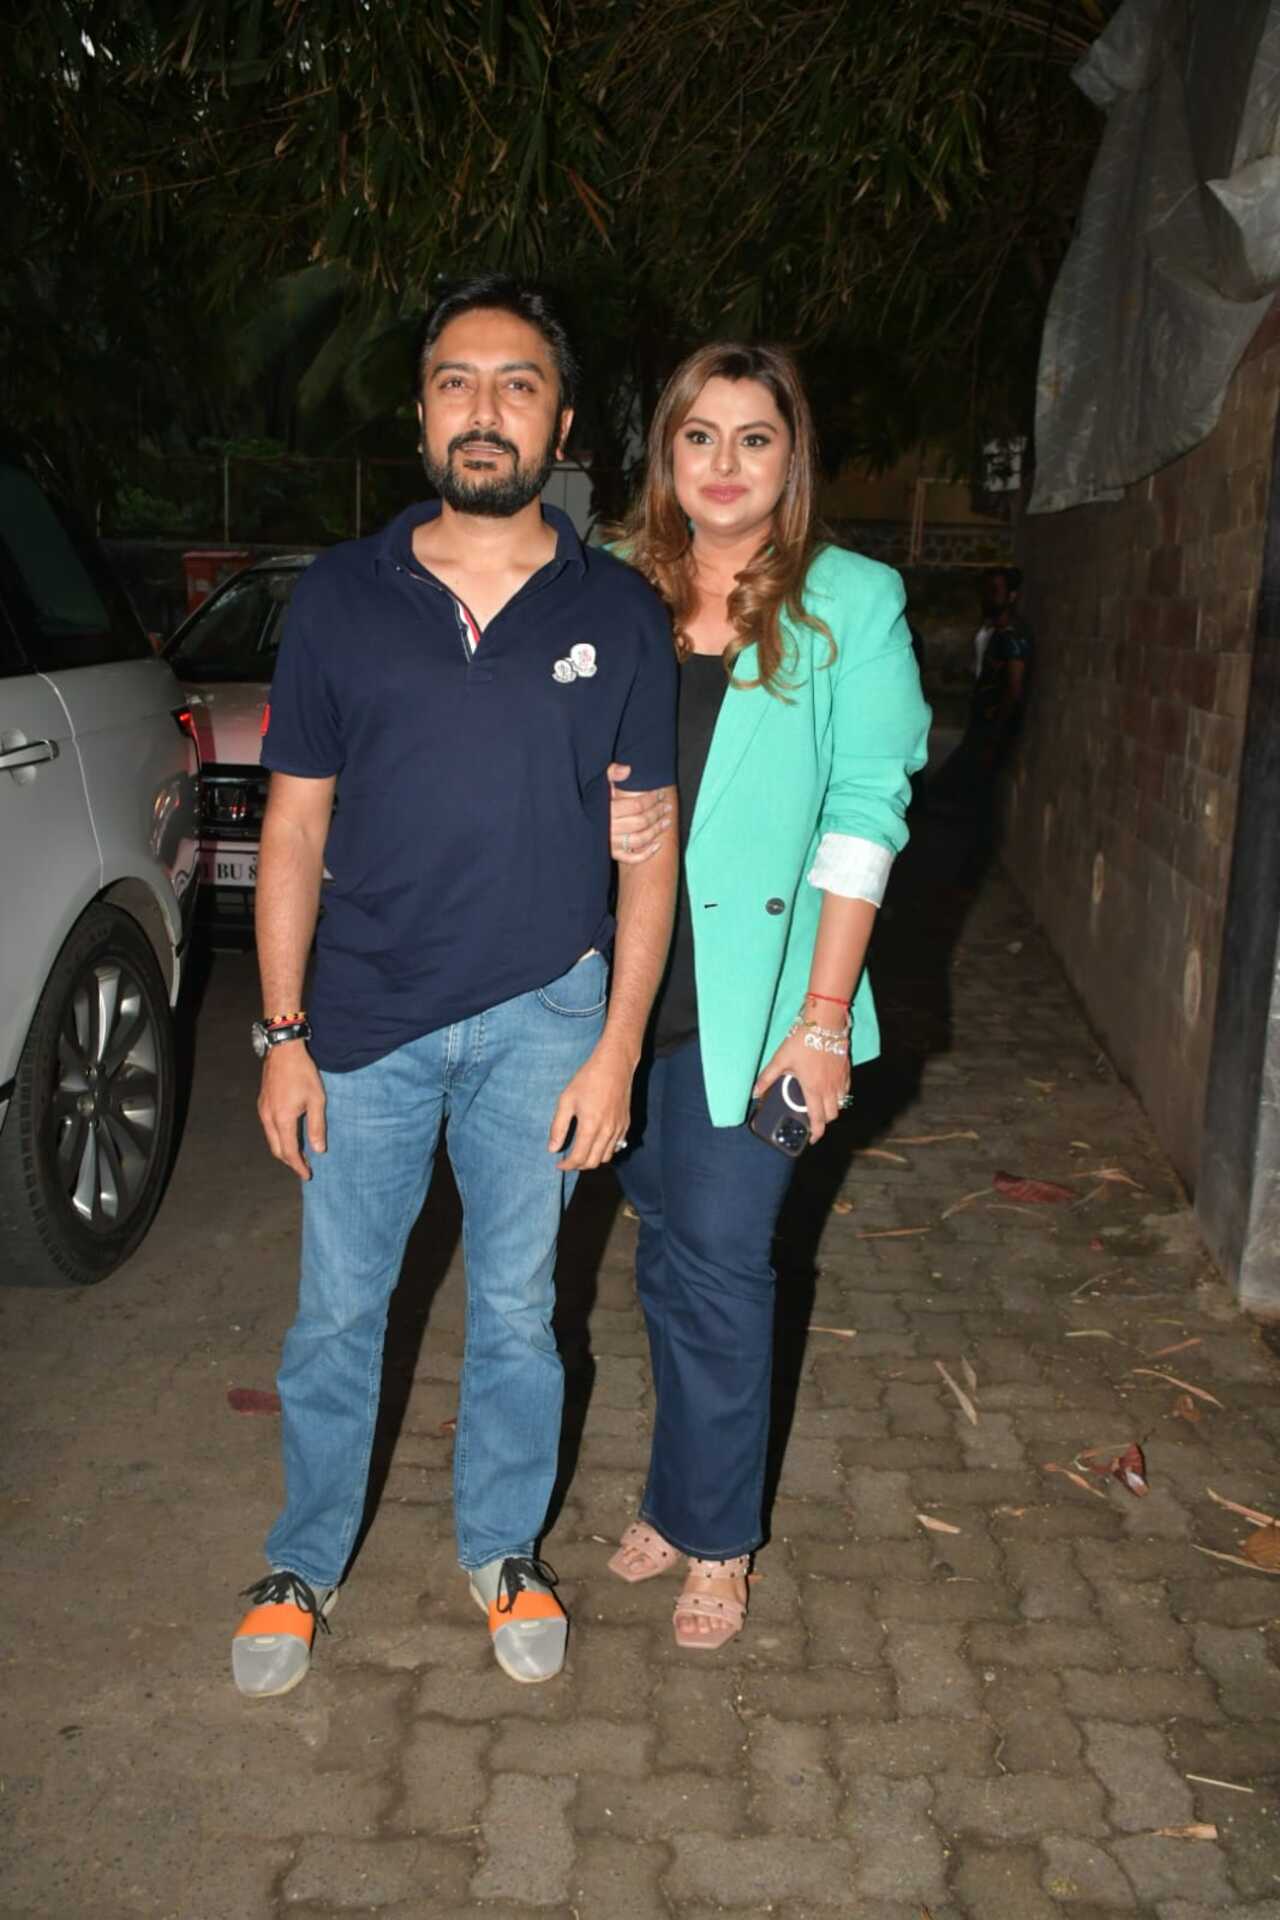 Deepshikha Deshmukh, the producer of Mission Raniganj, attended the screening with her husband, politician Dheeraj Deshmukh